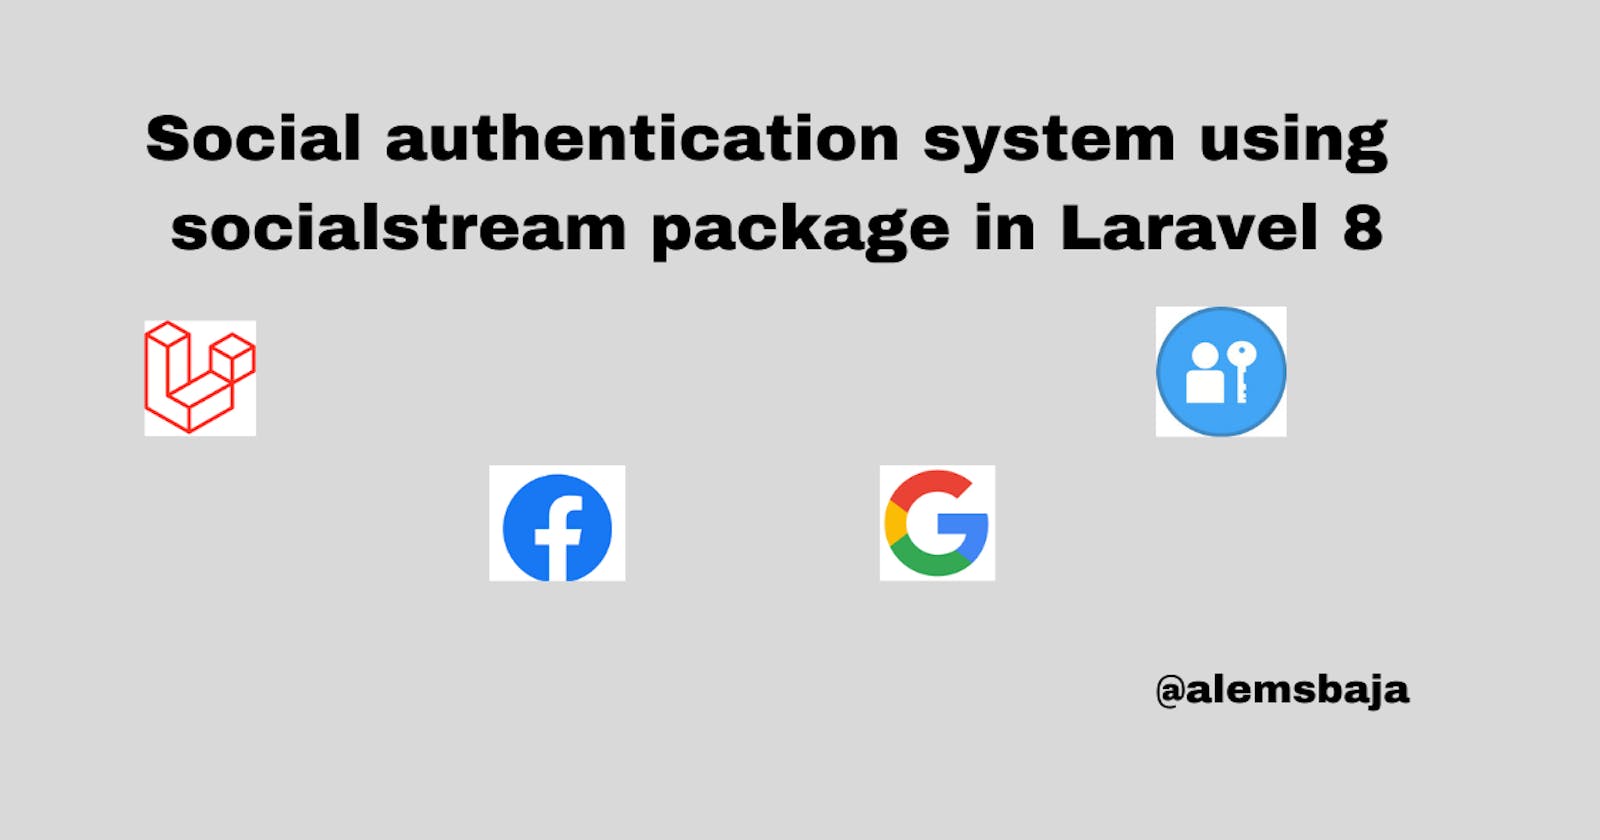 Social authentication system using socialstream package in Laravel 8